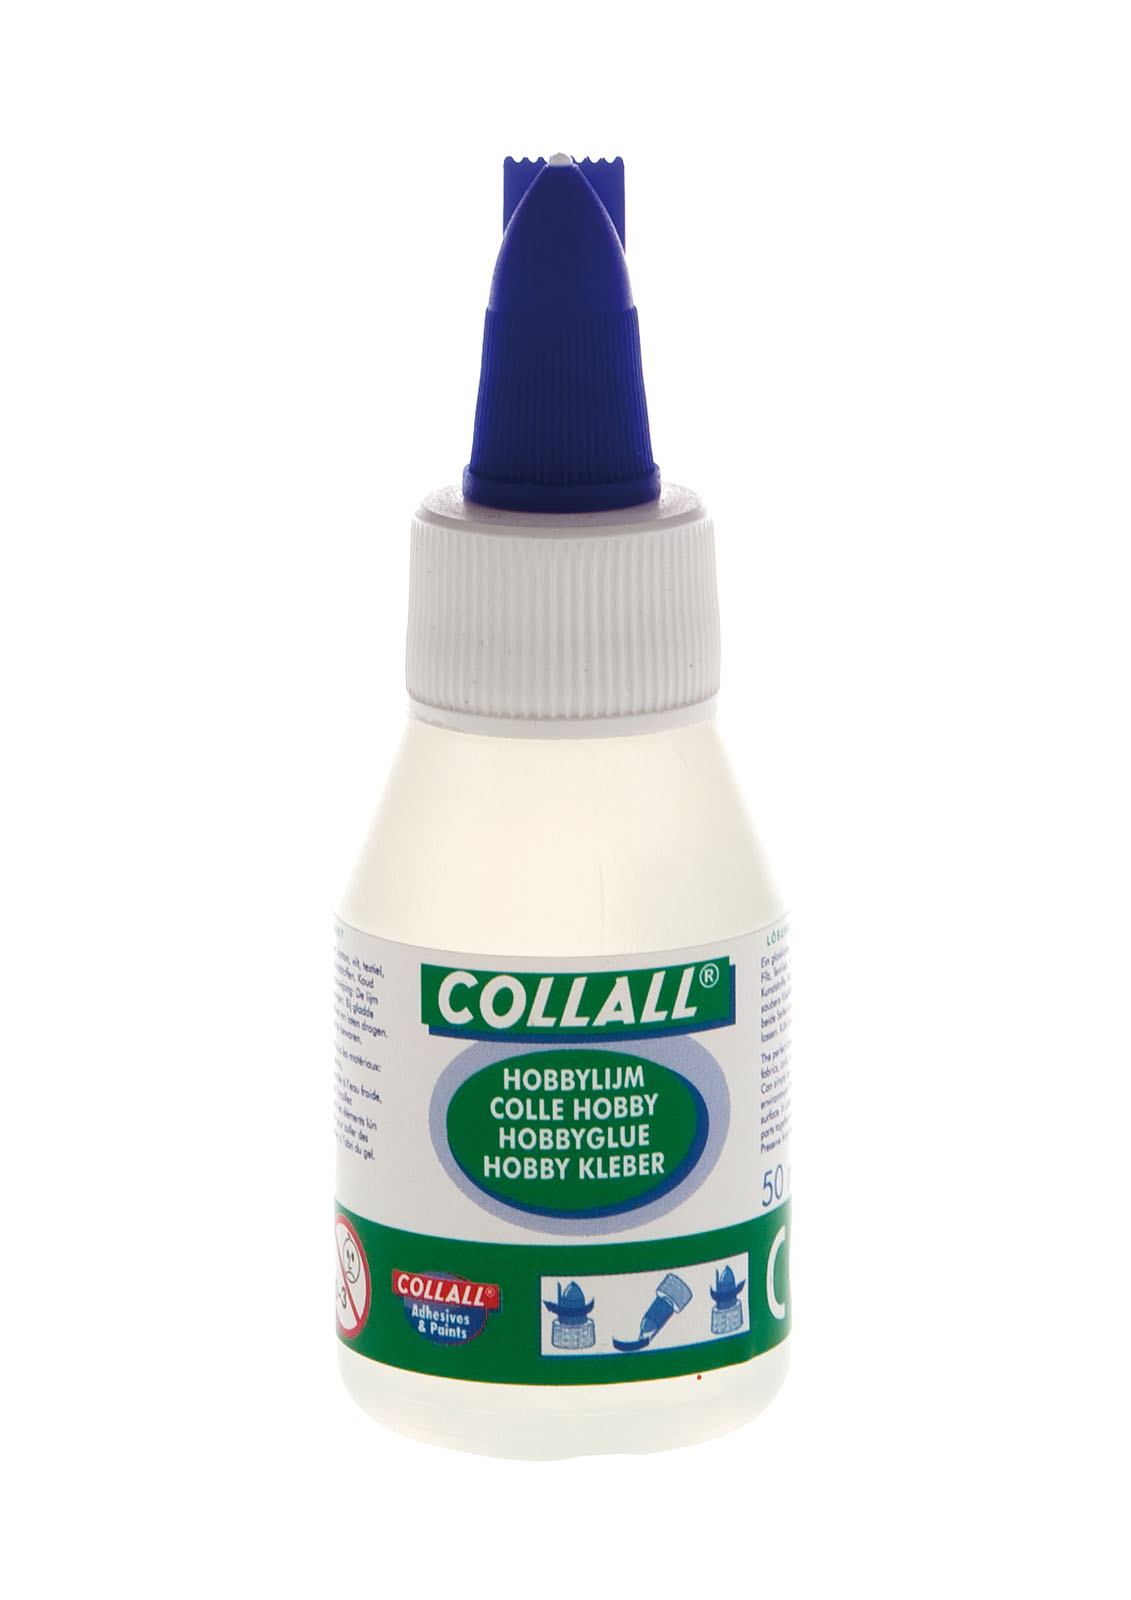 Collall • Hobby glue 50ml